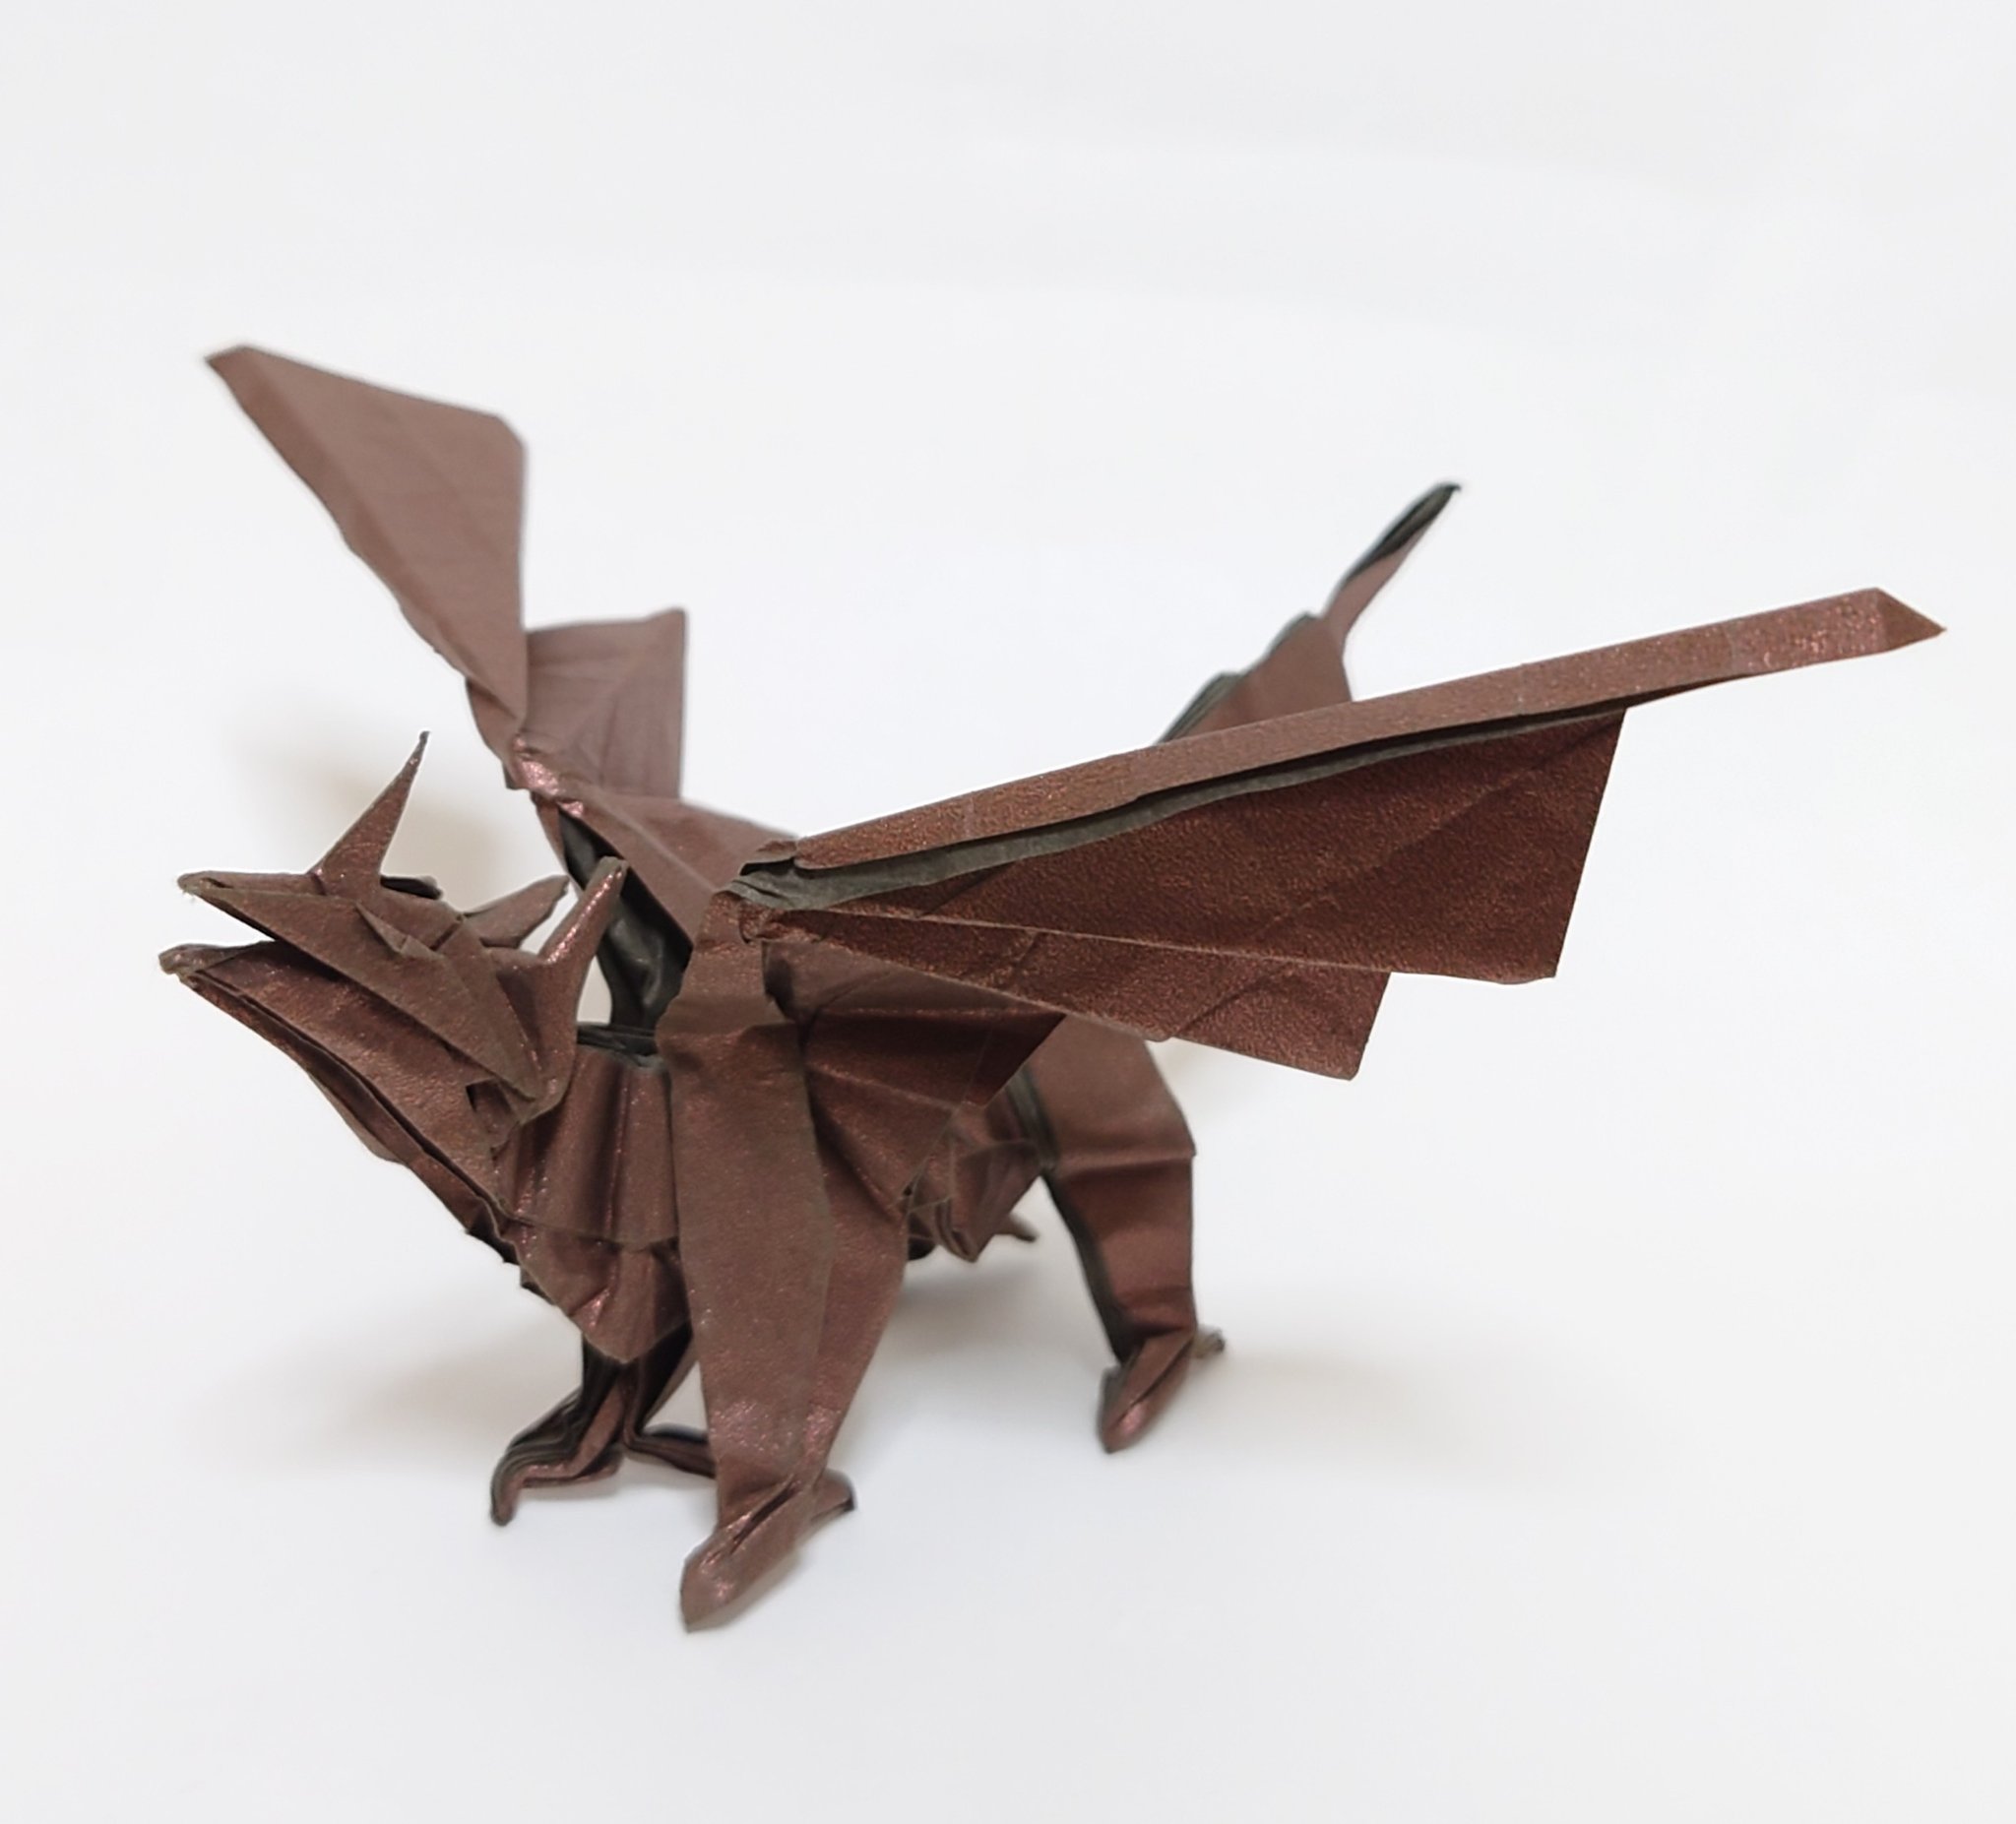 Hana 折り紙作品 106 今週も 山口真 さんの新刊図書 Origamidragons から折るものを選びました 大内康治 さんの スマートドラゴン です 大好きな段折りから かっこいいドラゴンに折りあげていく工程が楽しかったです 折り紙 おりがみ Origami